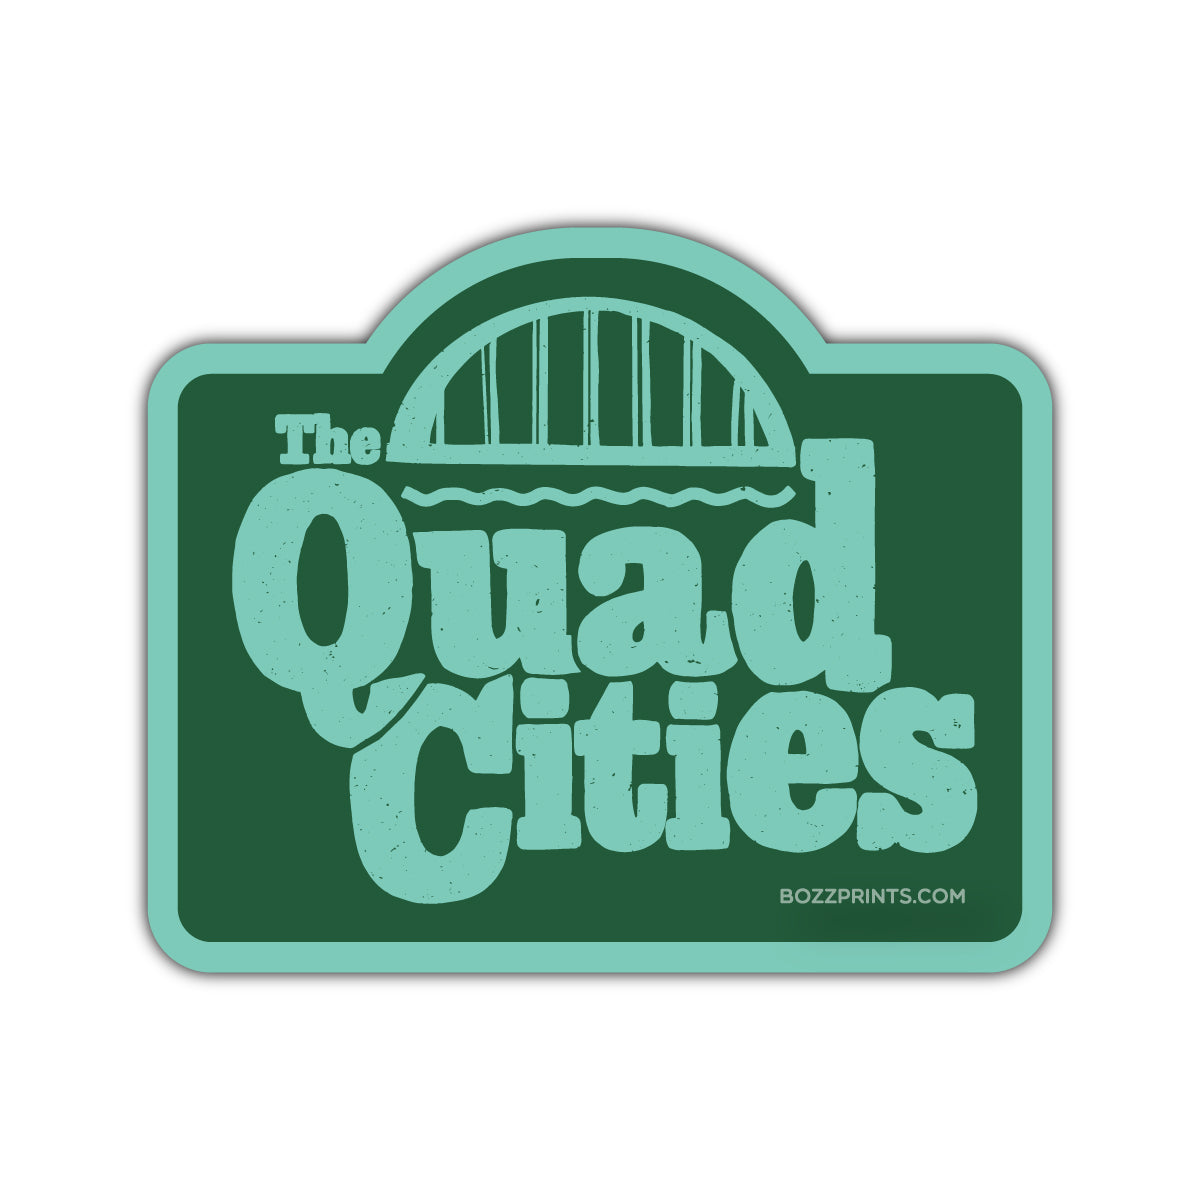 The Quad Cities Bridge - Bozz Prints